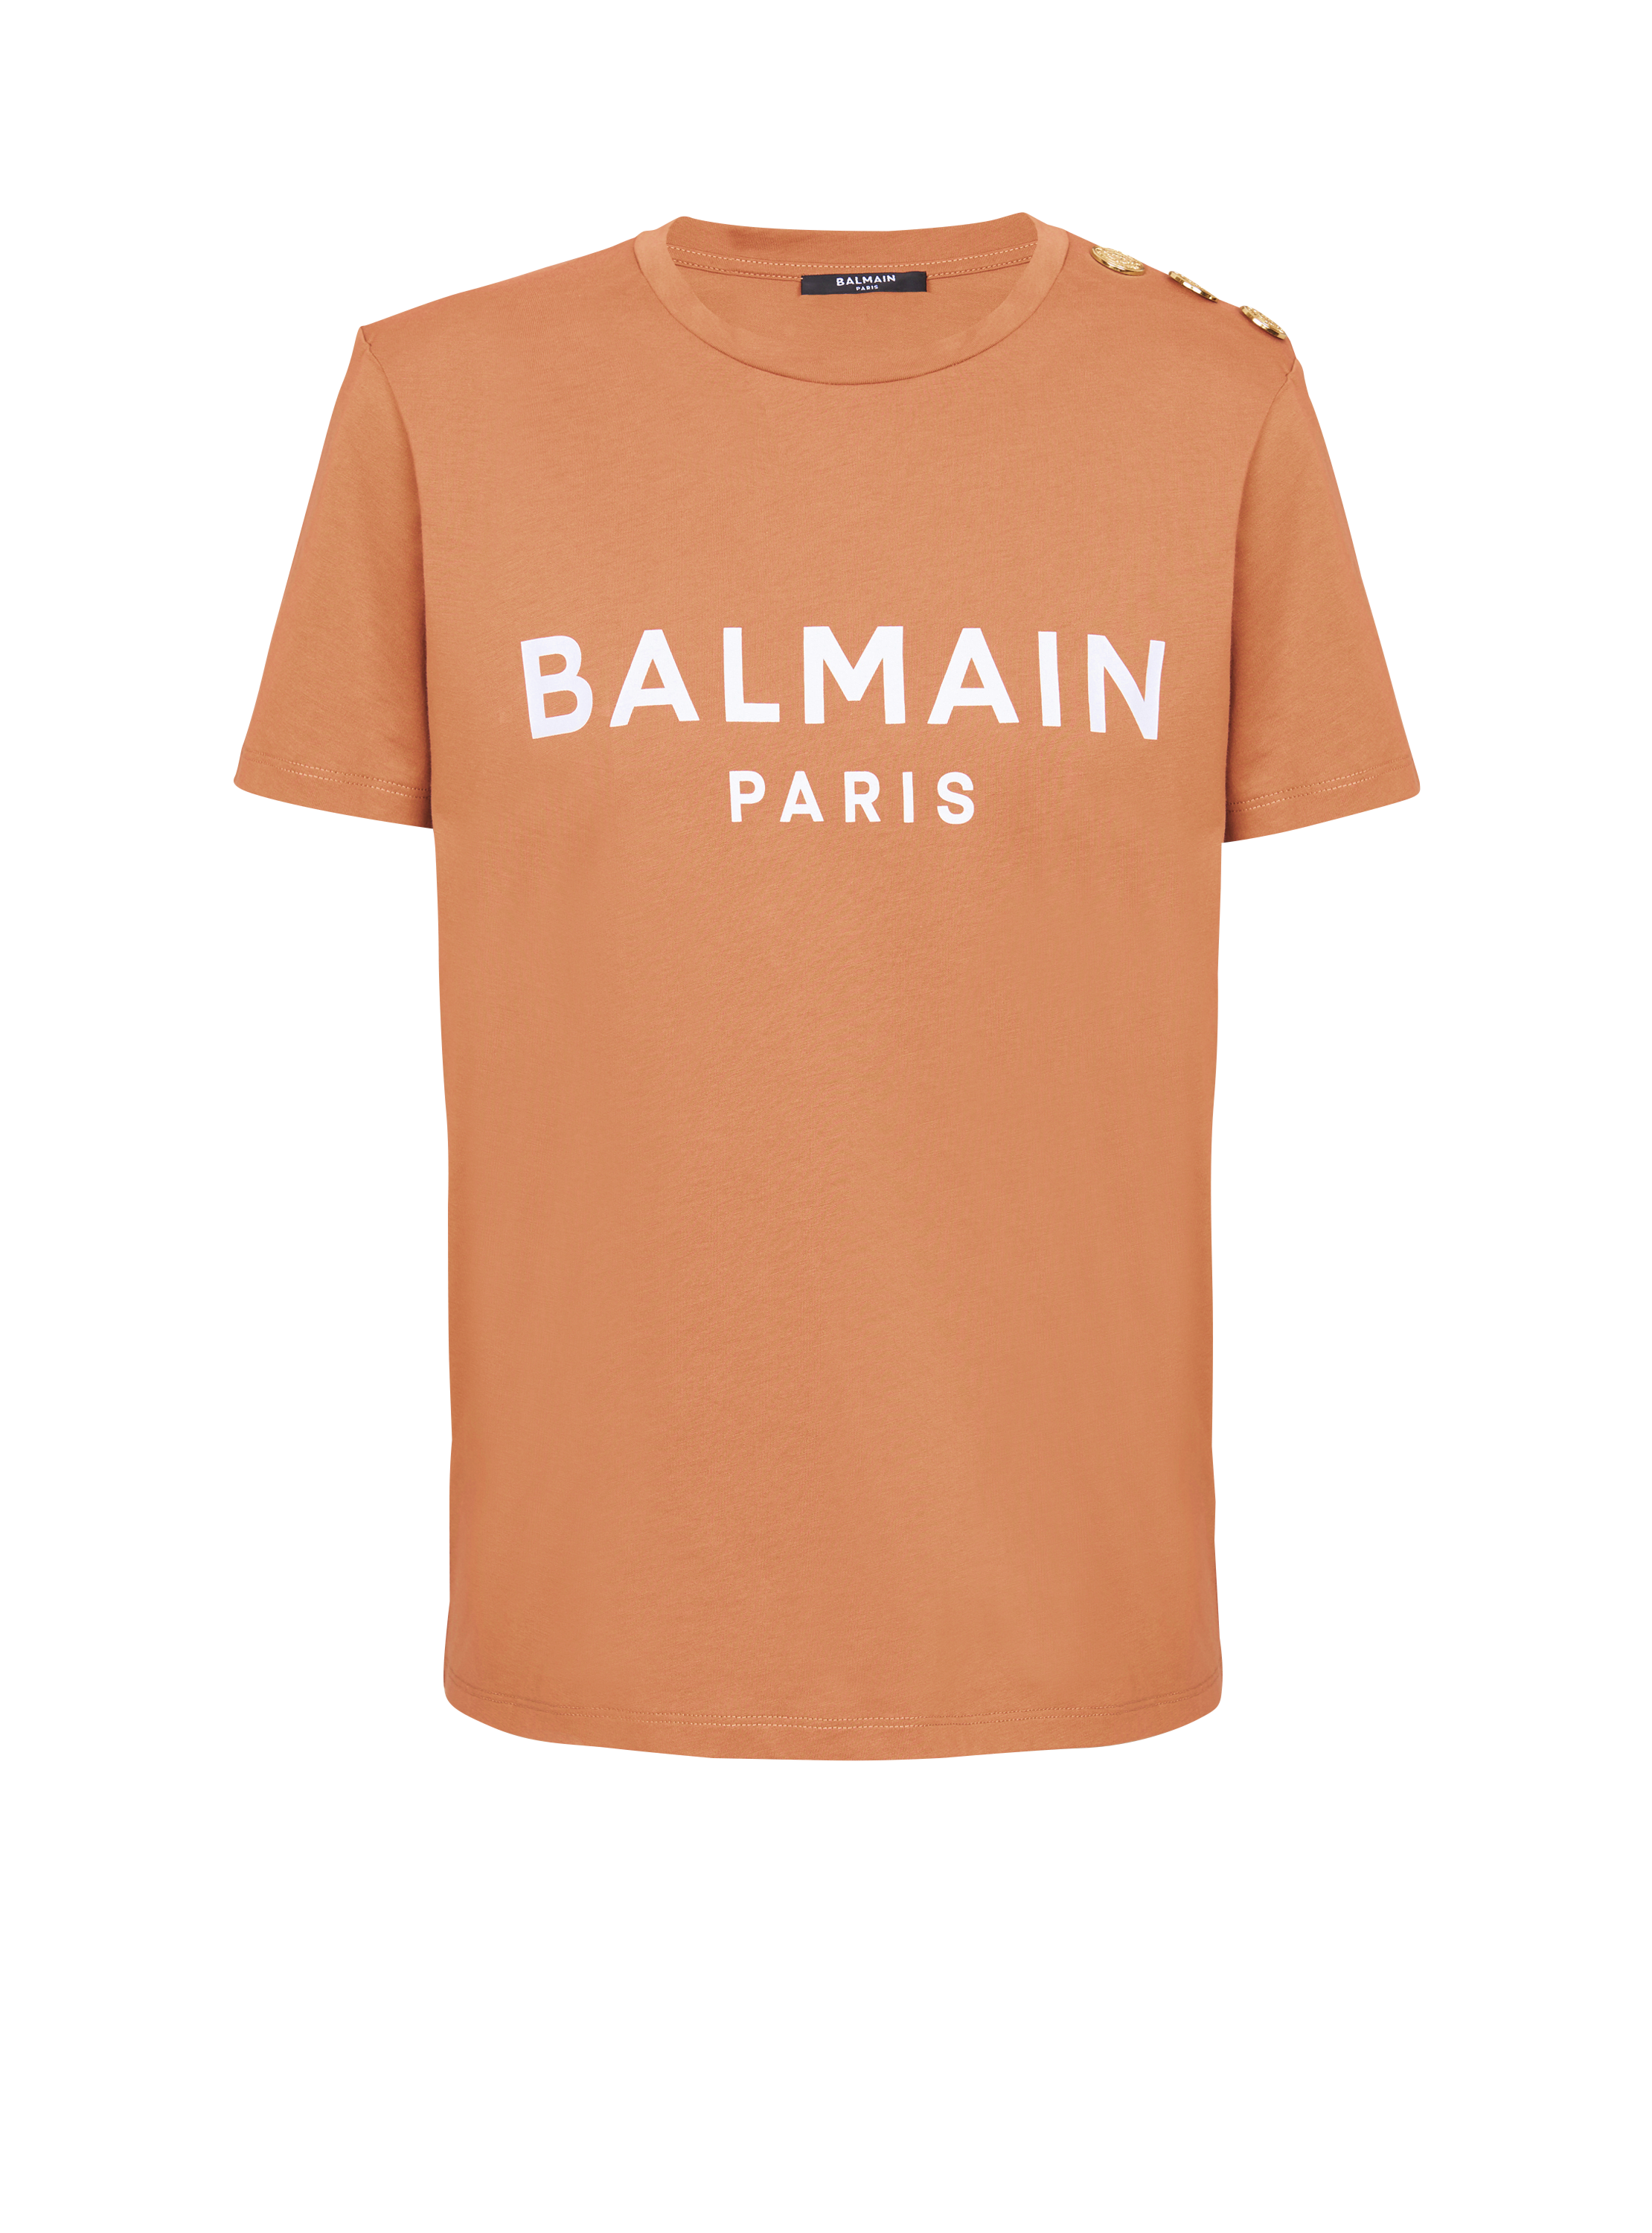 T-shirt con bottoni e logo Balmain stampato